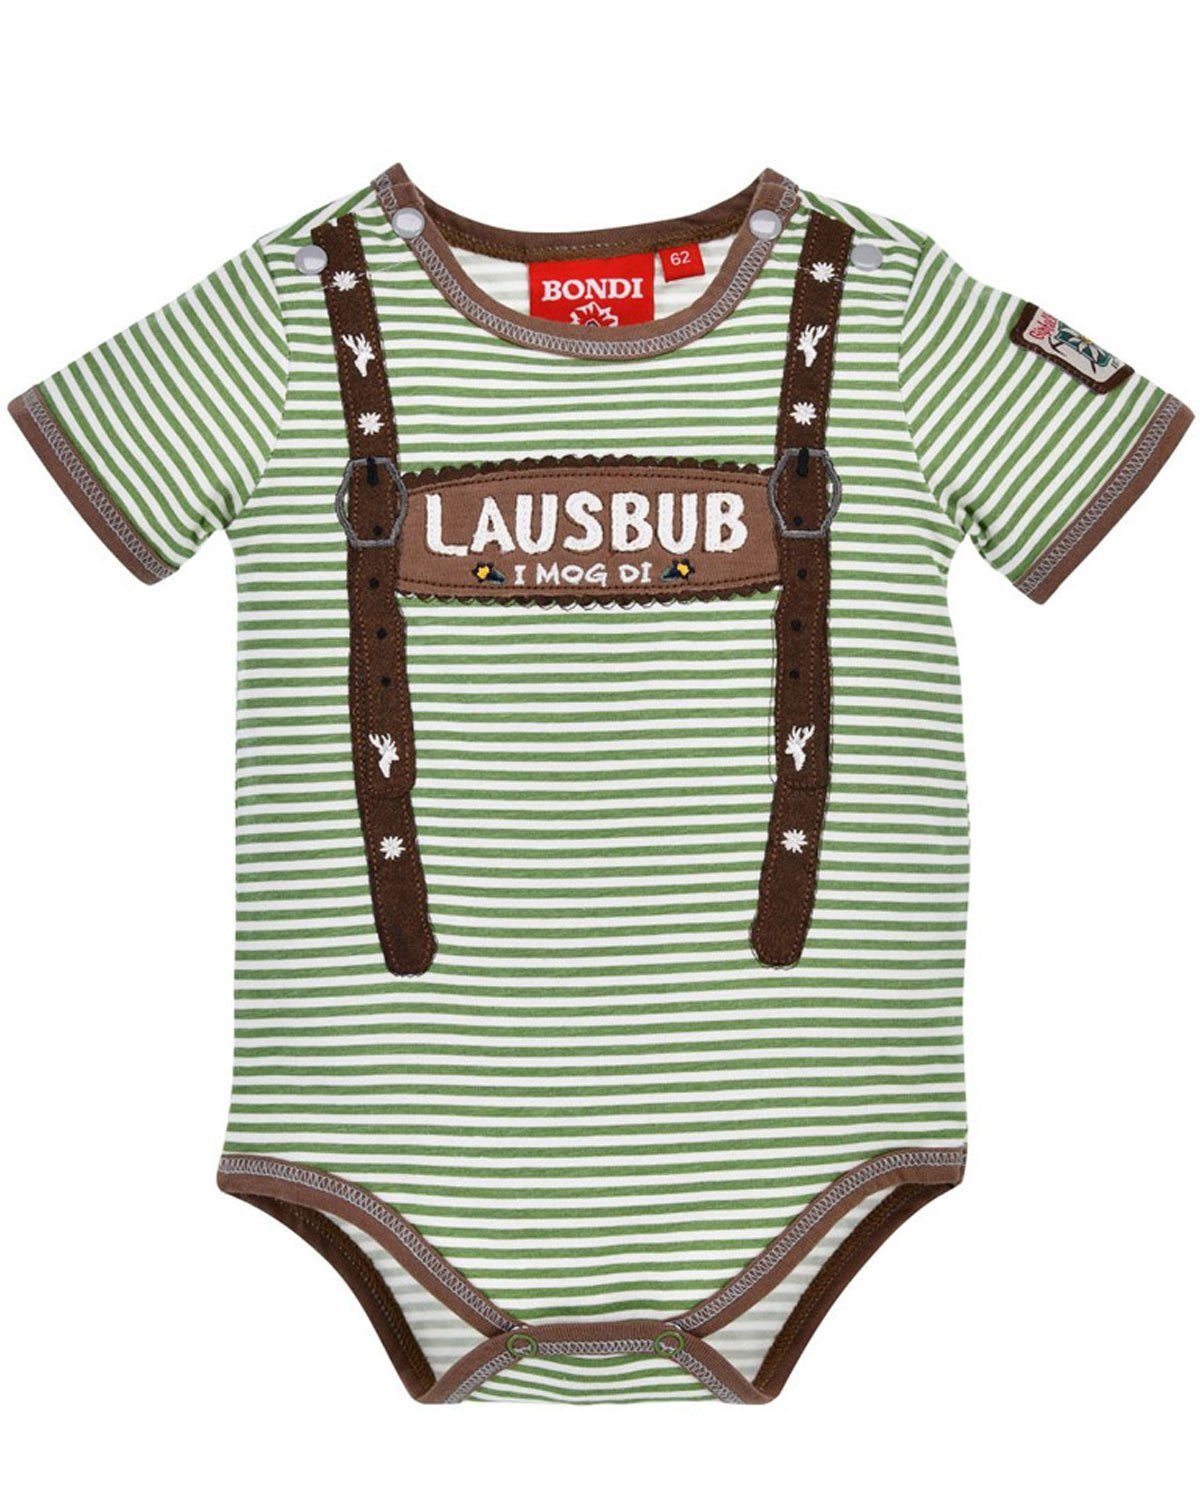 Body Grün 'Lausbub' BONDI ges Strampler 91636, Kurzarm Baby BONDI